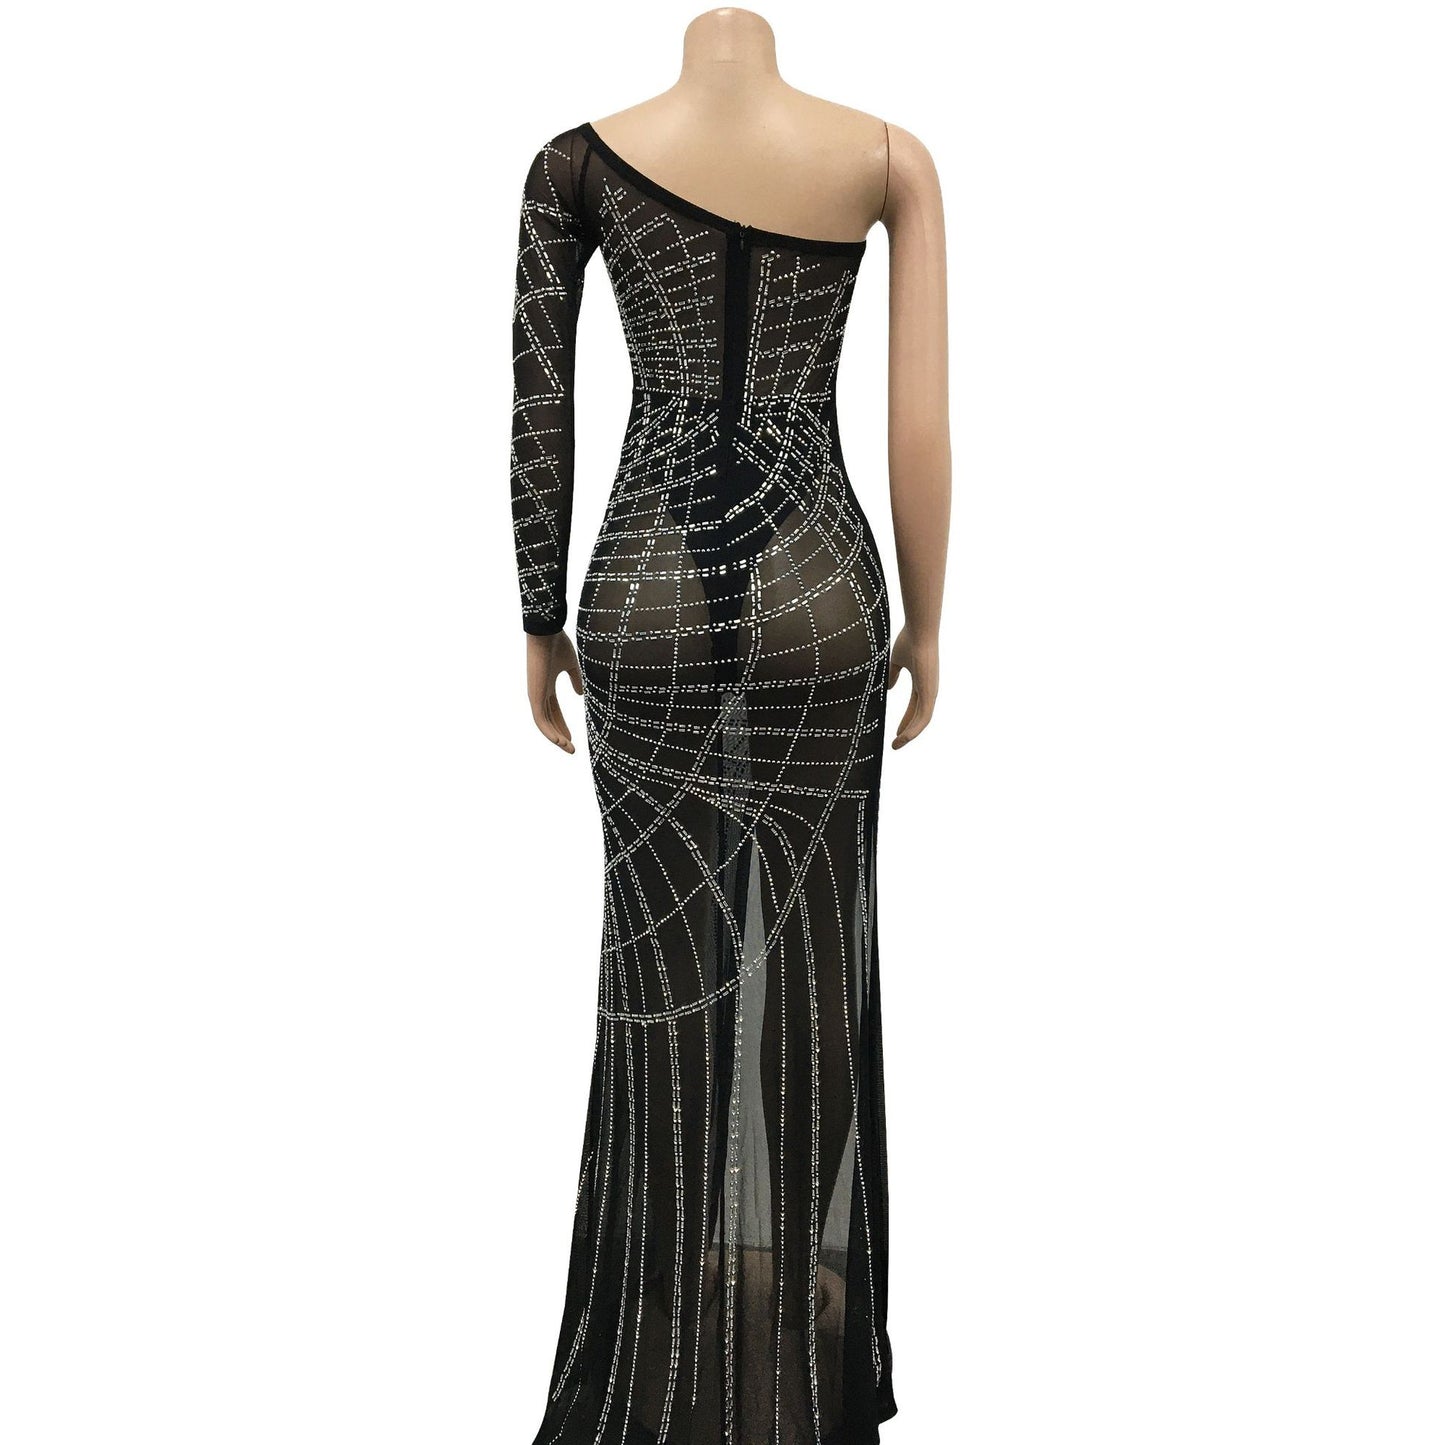 MALYBGG Rhinestone Adorned Long Dress for Women 6060LY